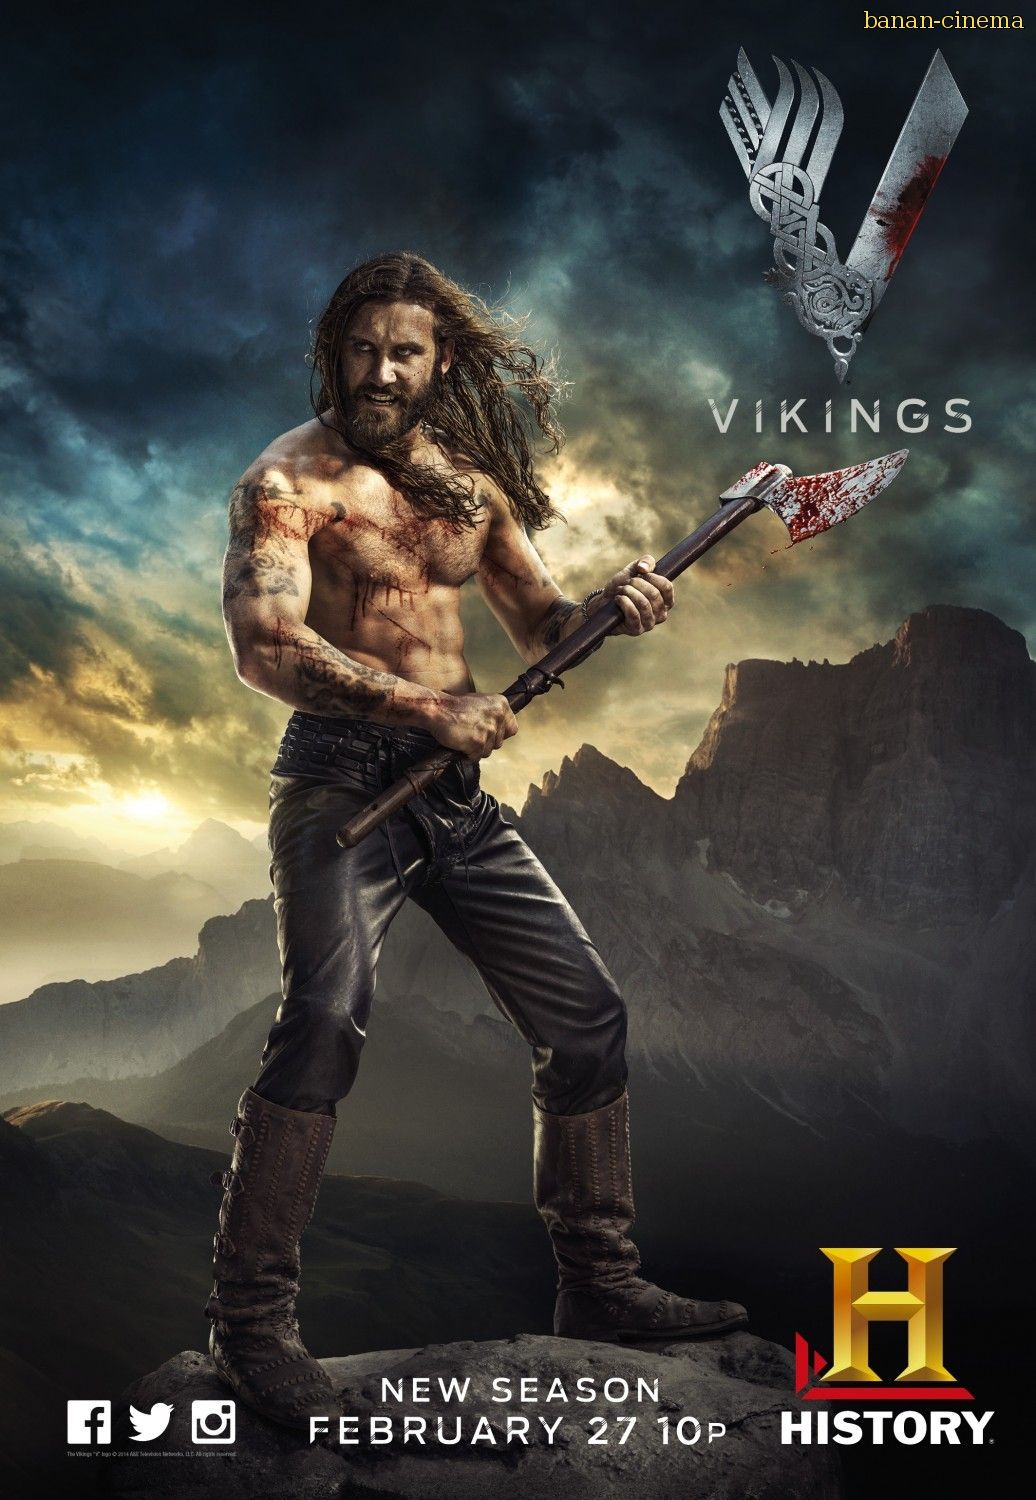 Смотреть Викинги / Vikings (2 сезон) онлайн в плеере Вконтакте 720p